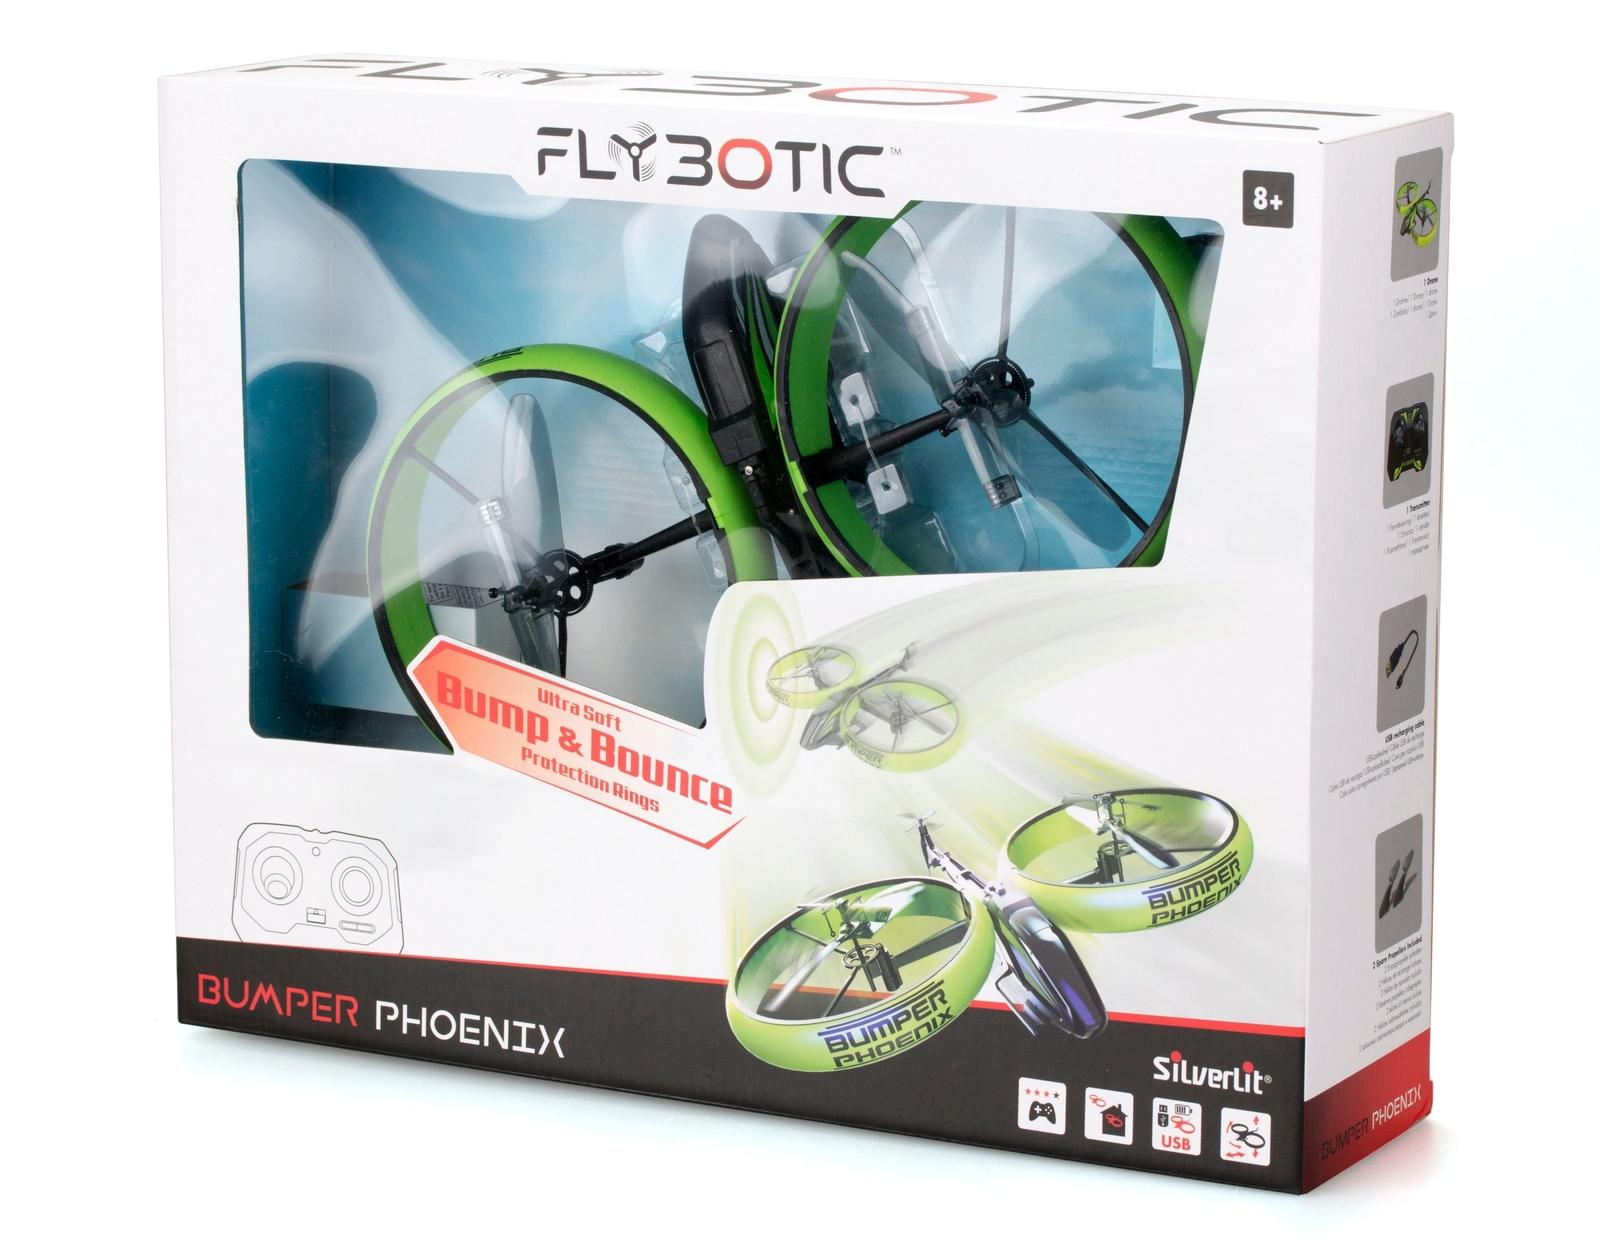 Flybotic Bumper Phoenix R/C Drone